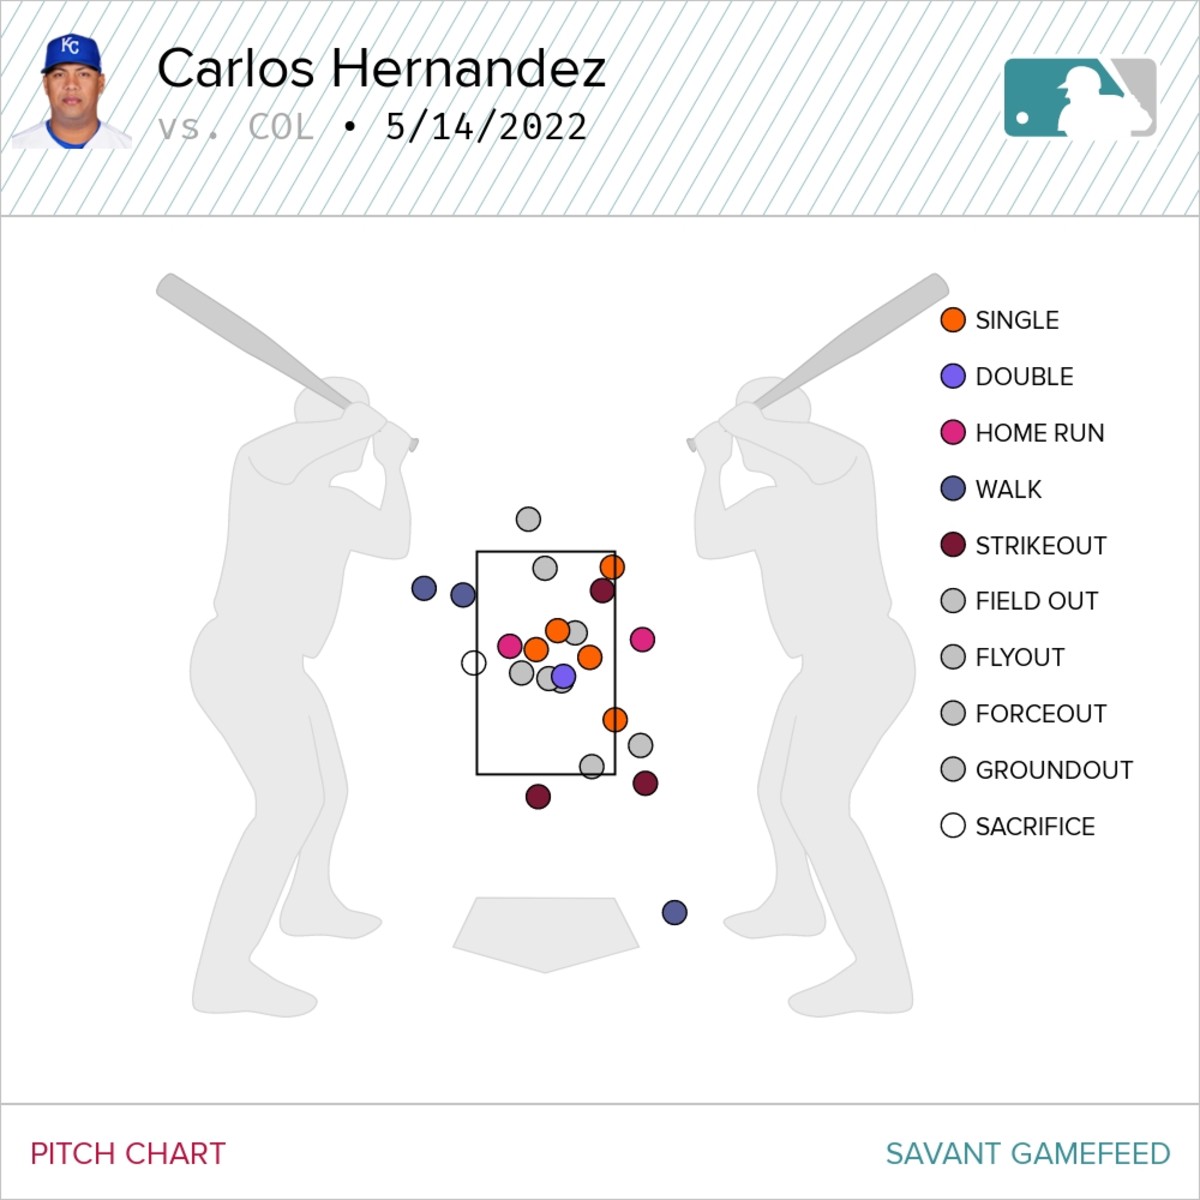 Carlos Hernandez pitch chart (results), courtesy of Baseball Savant.